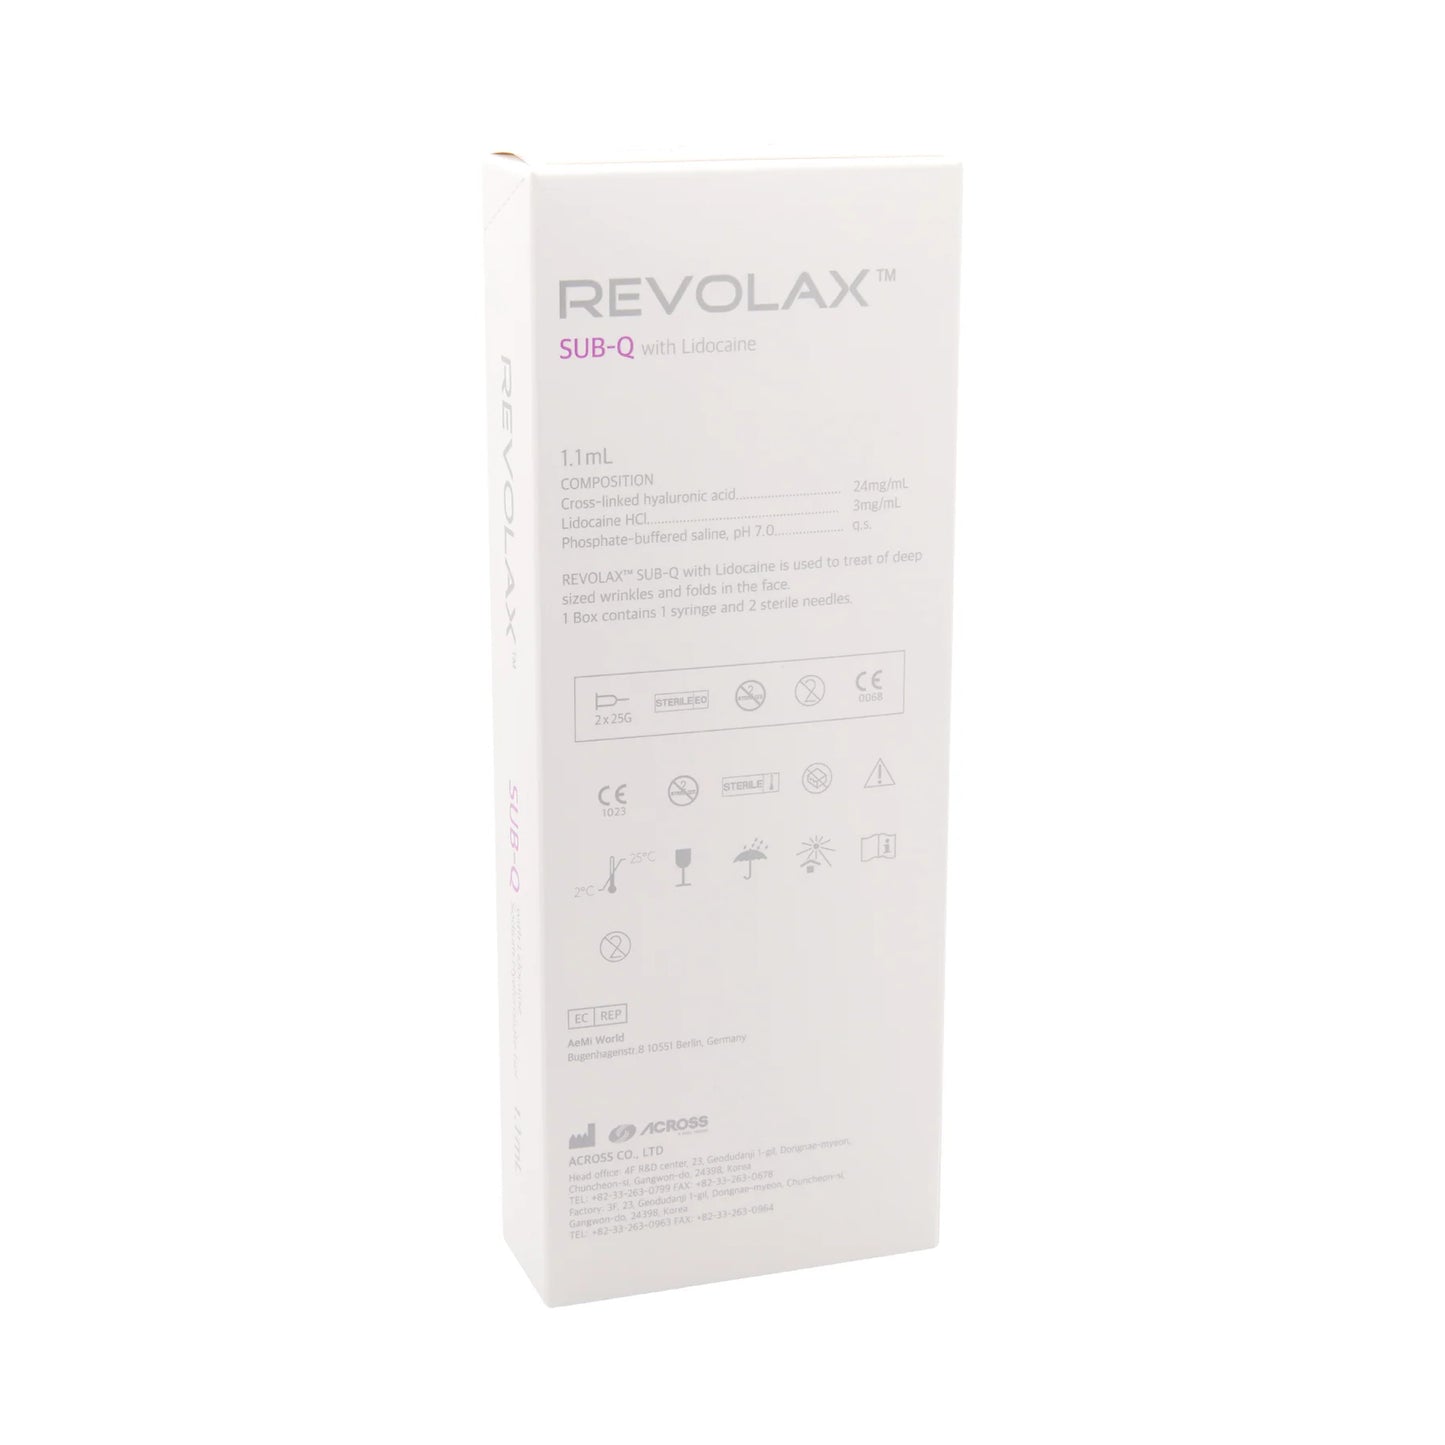 Revolax Sub-Q with Lidocaine (1x1ml)